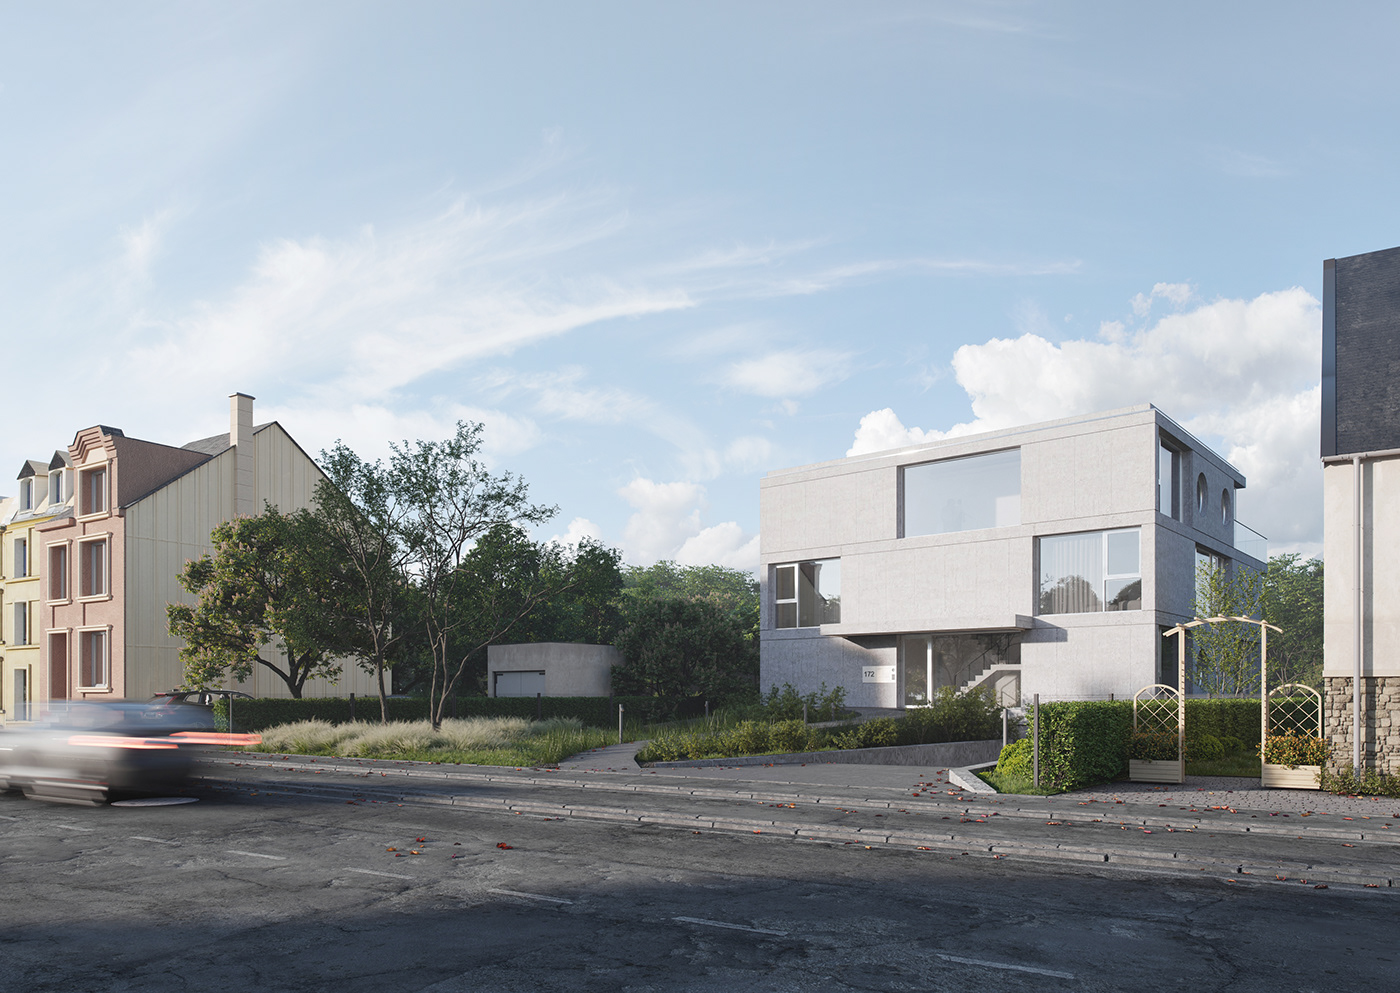 corona renderer vivid vision architecture visualization concrete Minimalism minimalist modern Brutalism housing